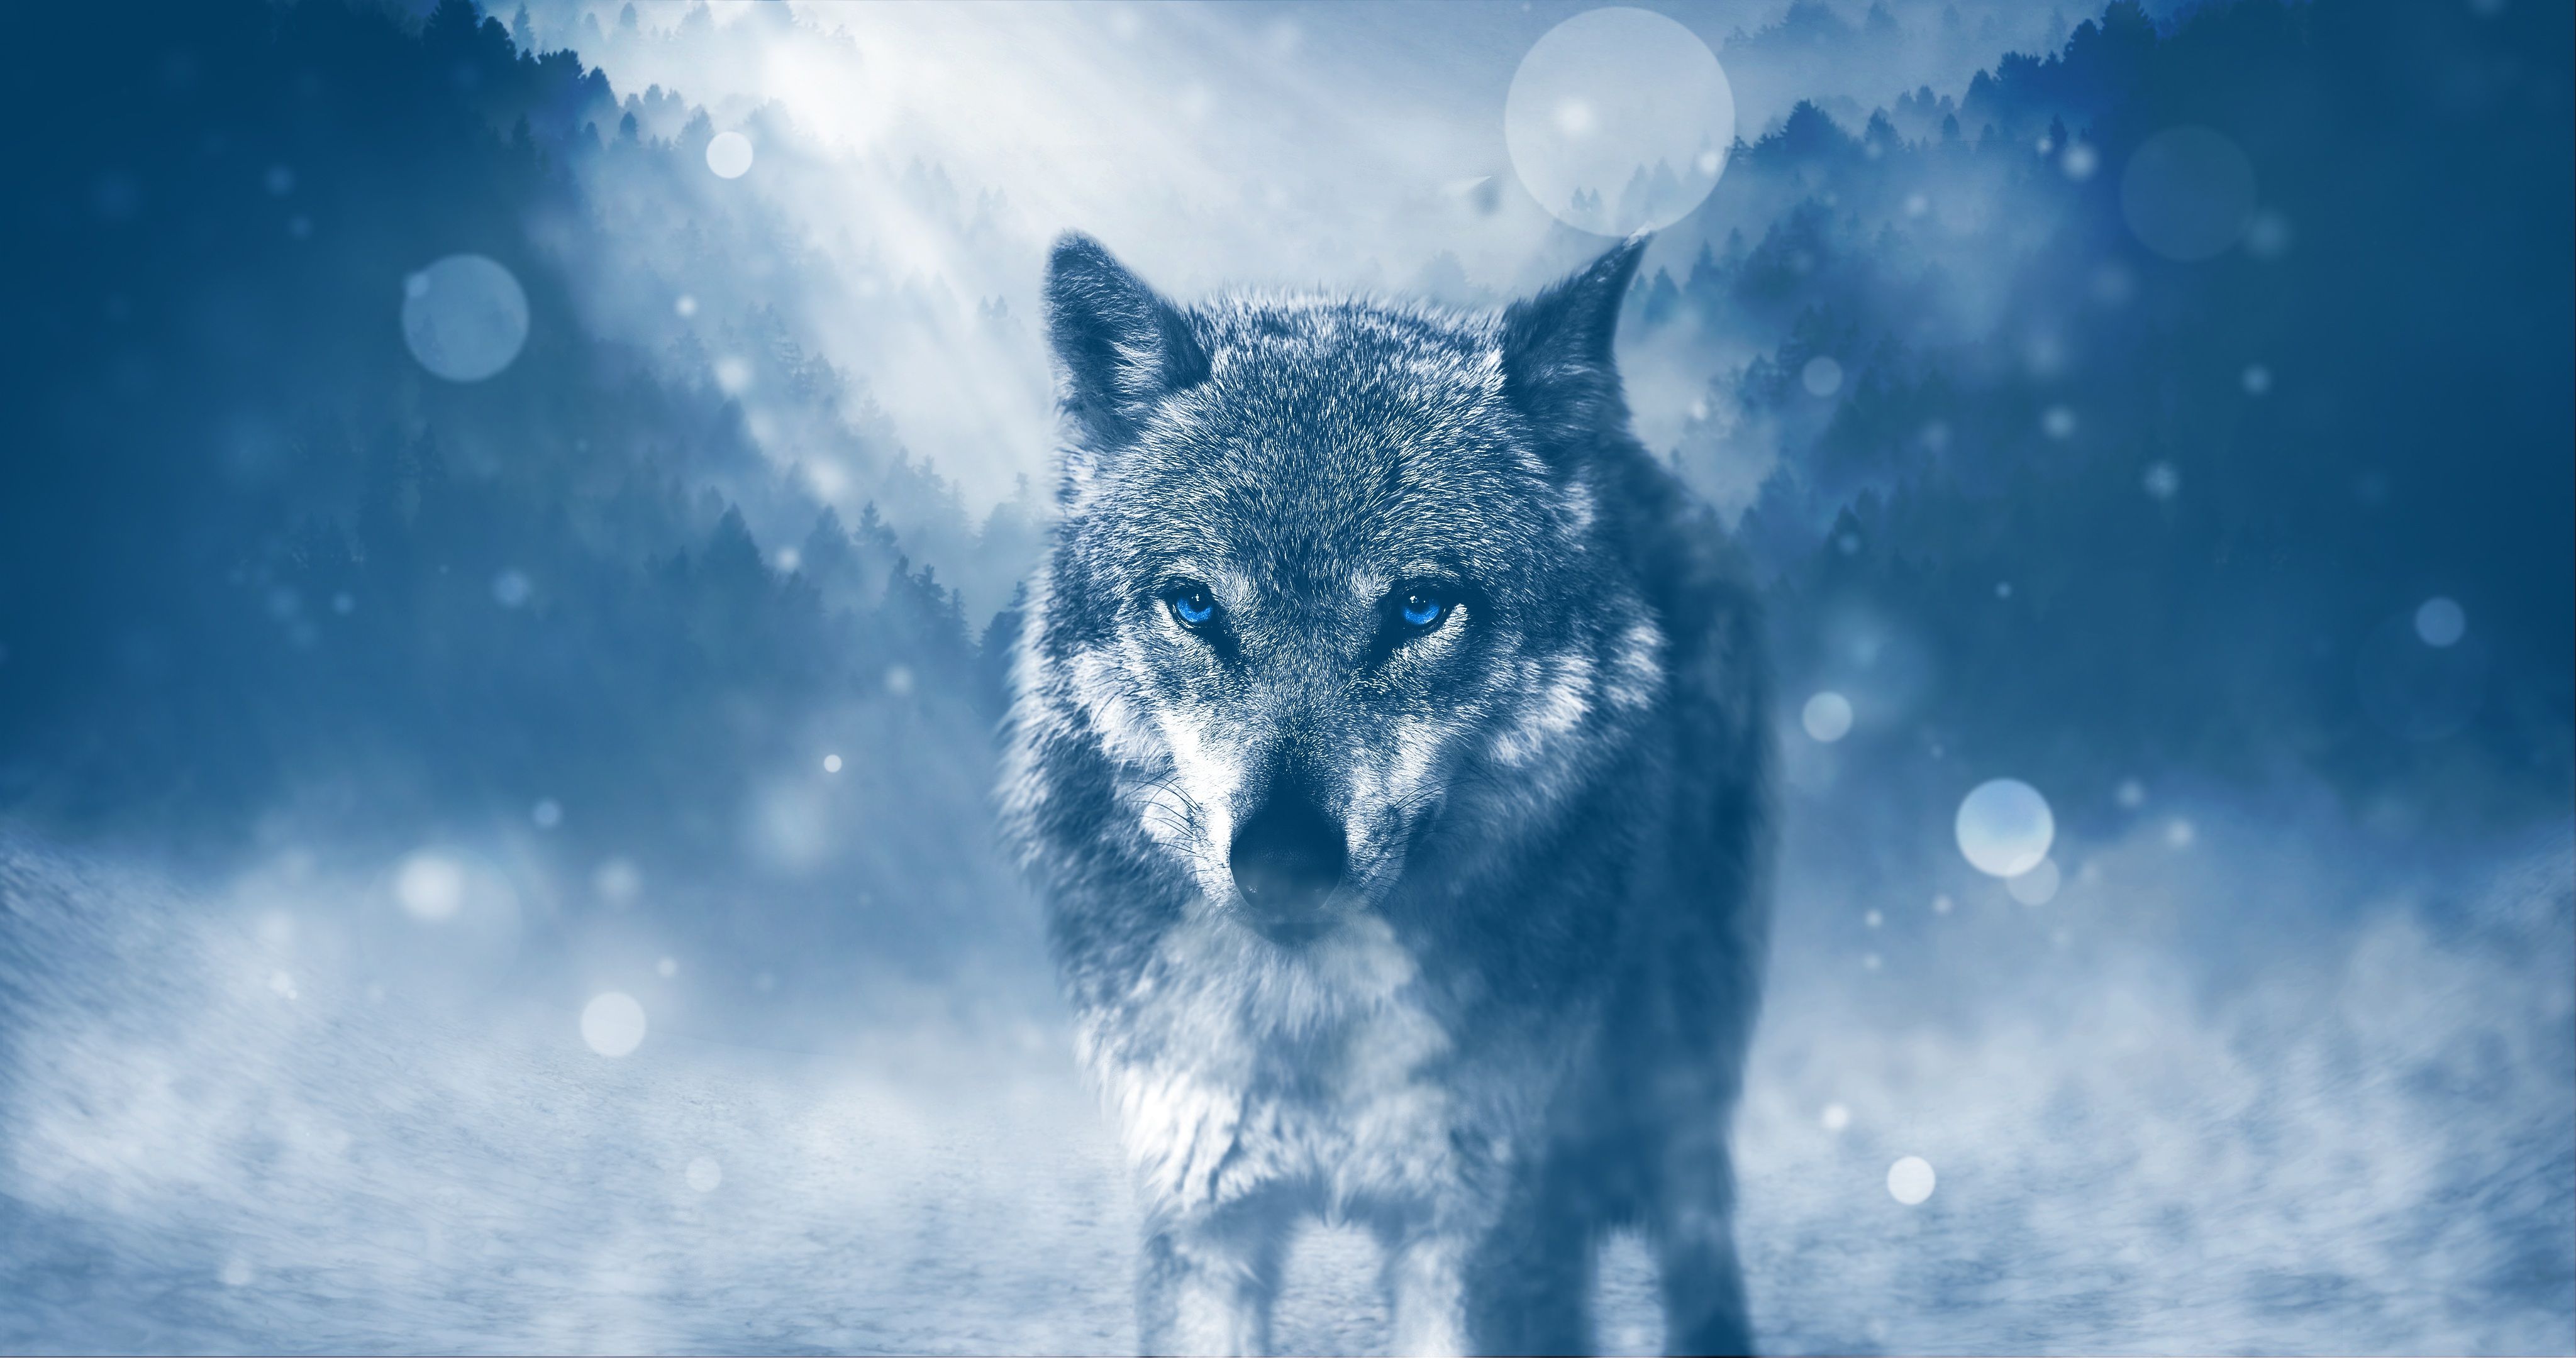 Download wallpaper 4096x2160 wolf, predator, photohop, glance, glare HD background